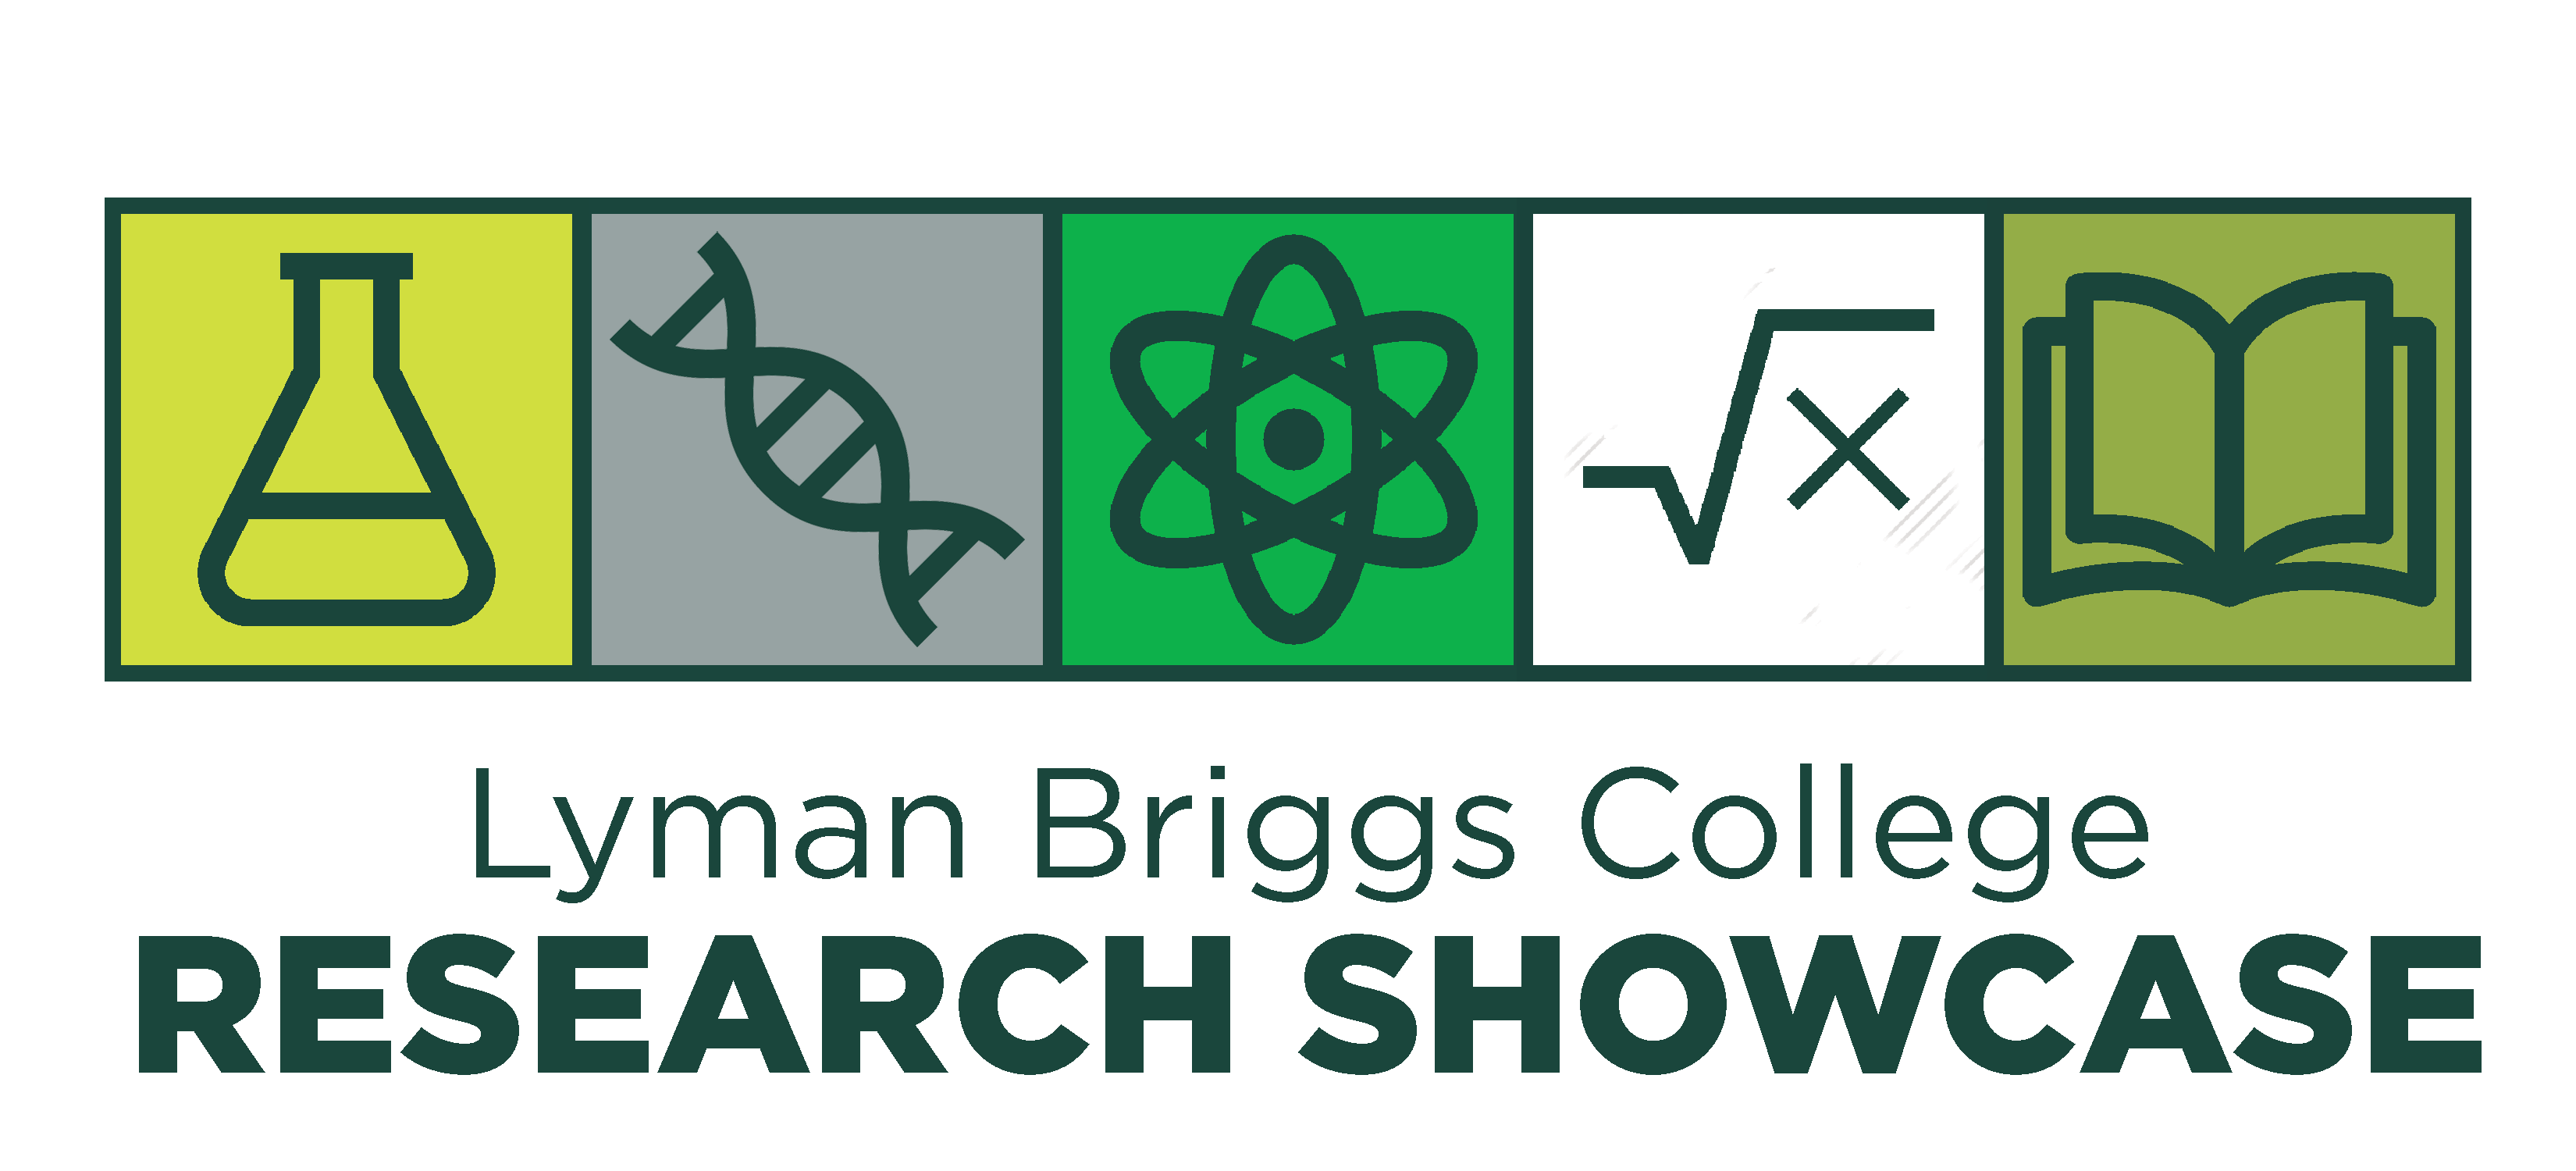 Lyman Briggs College Research Showcase